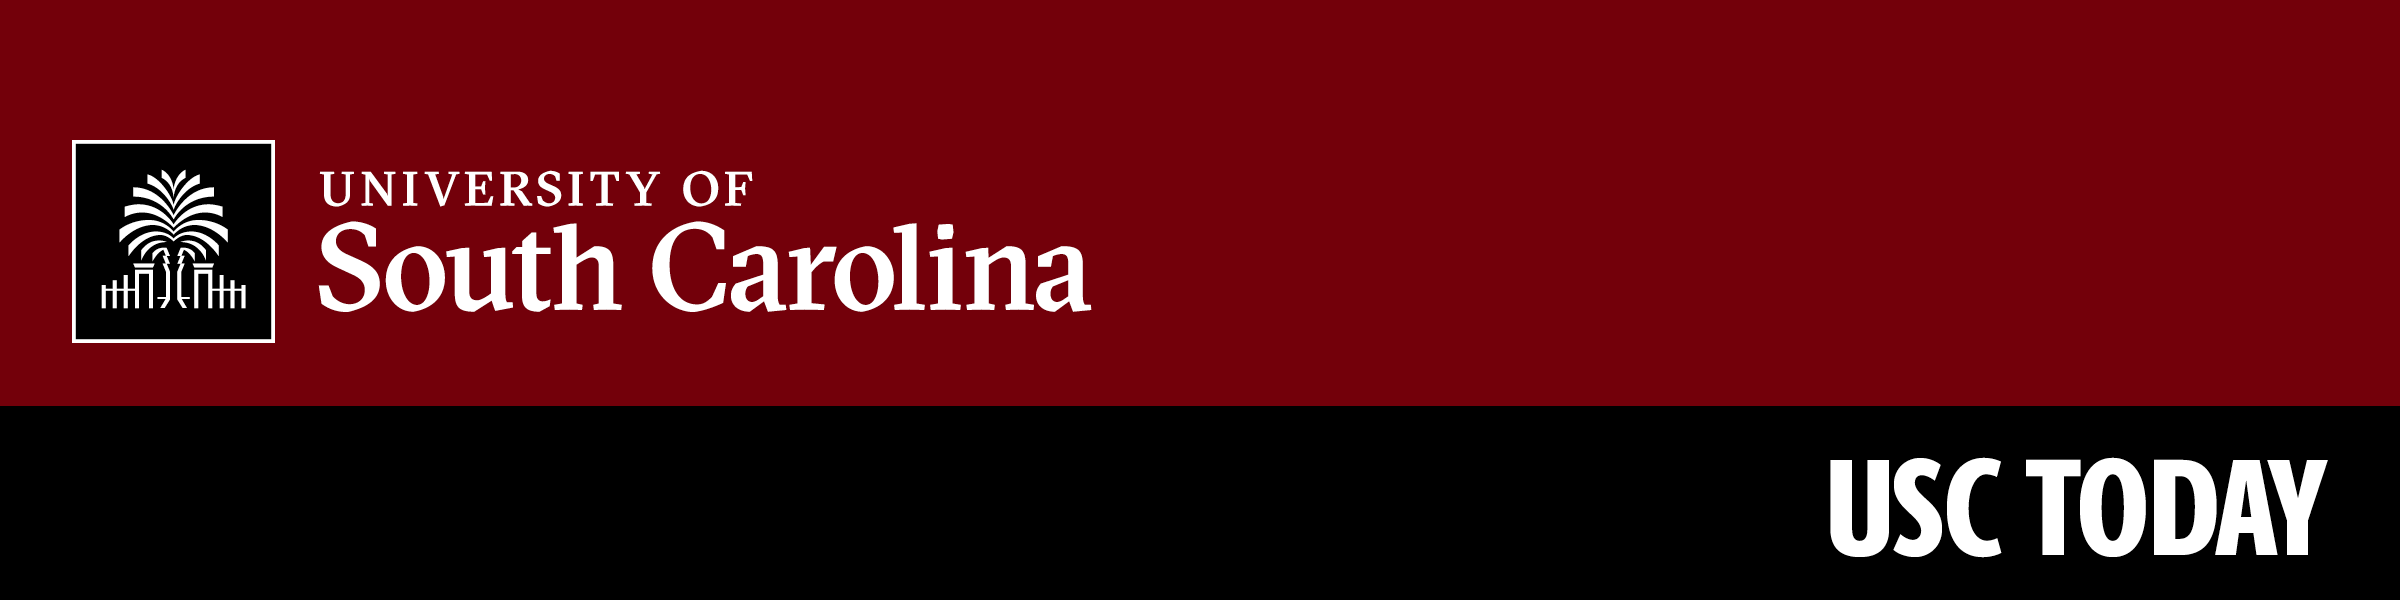 USC_Columbia banner